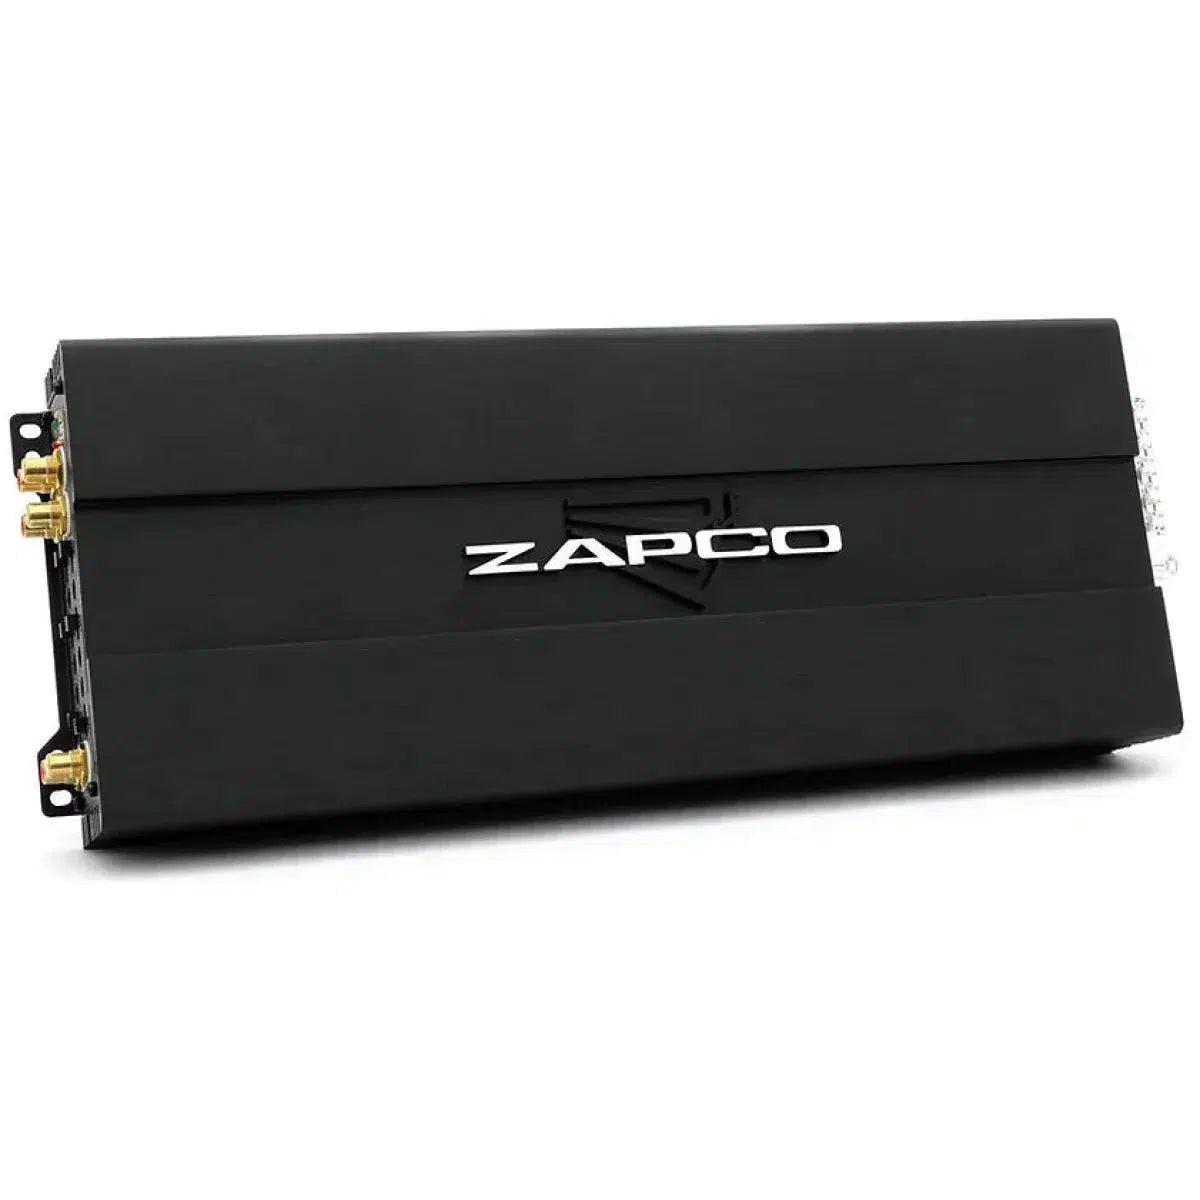 ZAPCO-ST-X Class AB Series - ST-5X II-5-Channel Amplifier-Masori.de